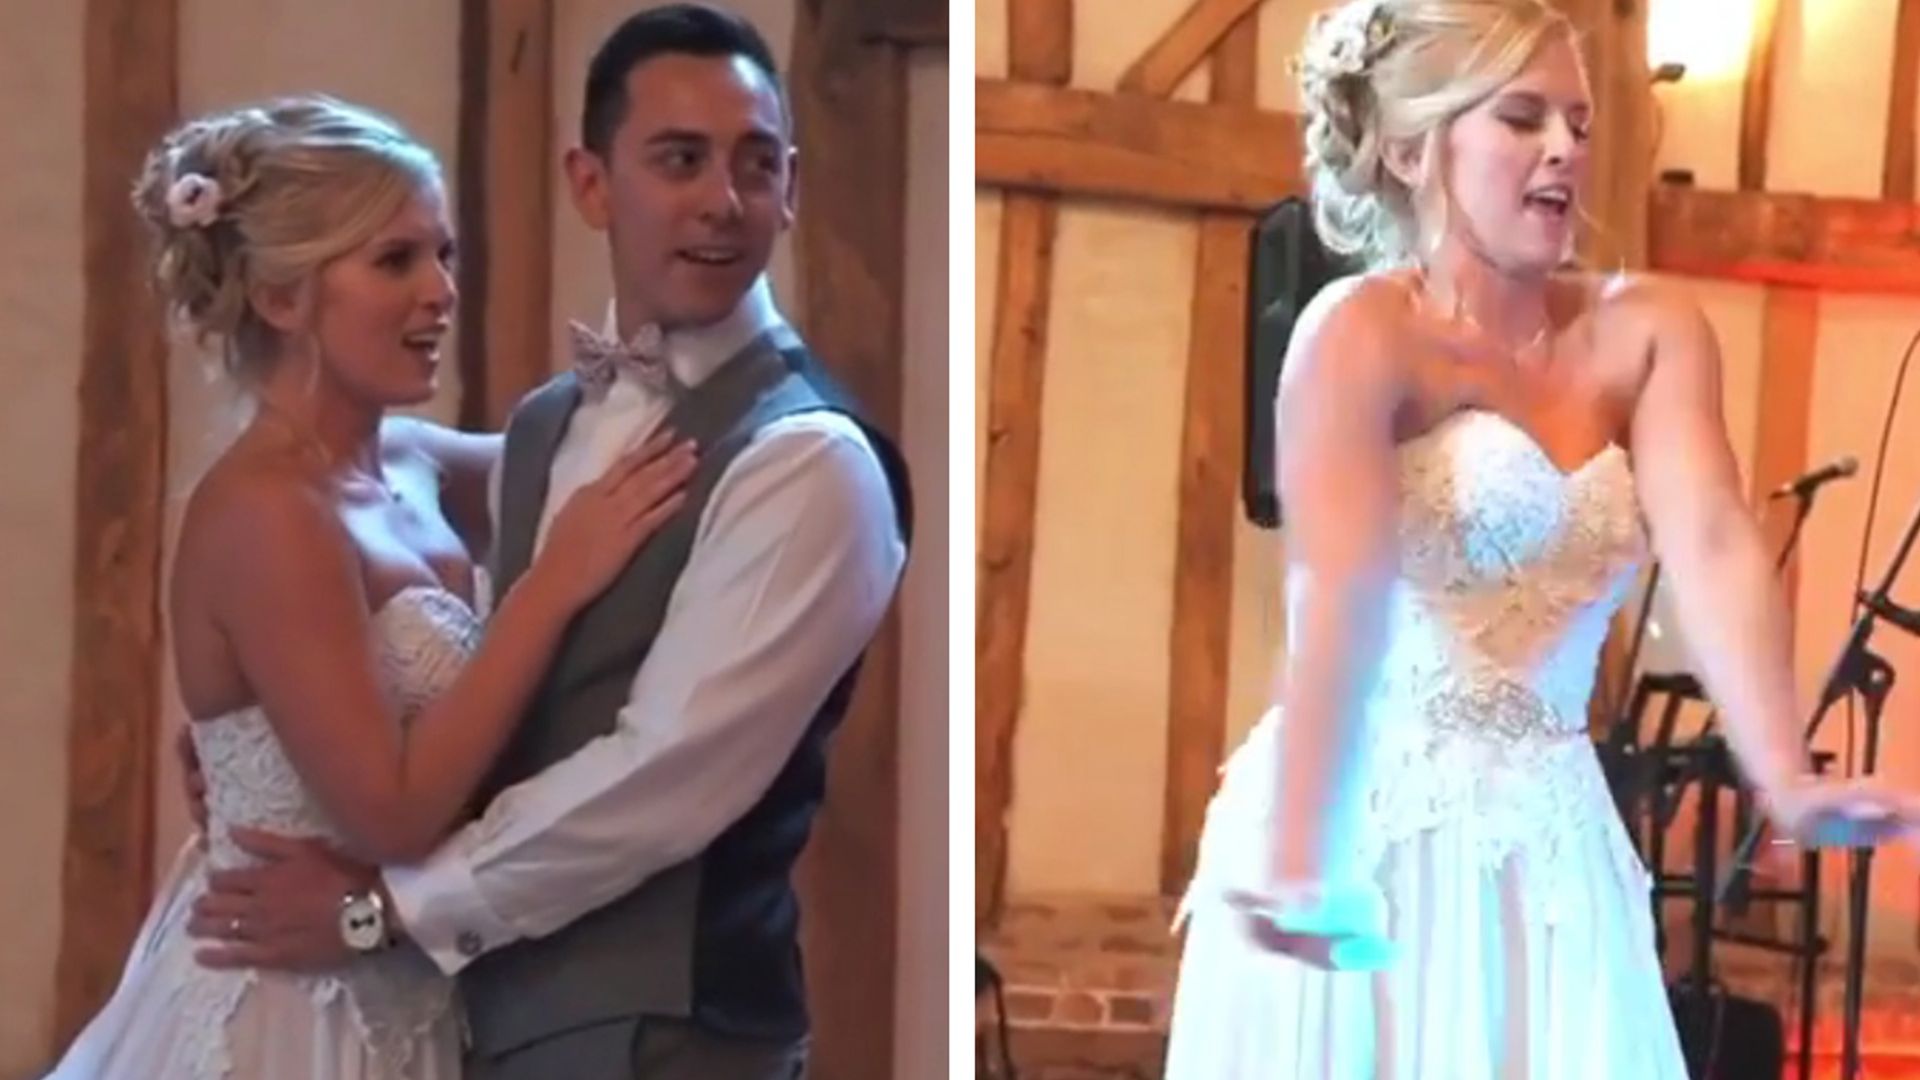 viral video bride wedding dance